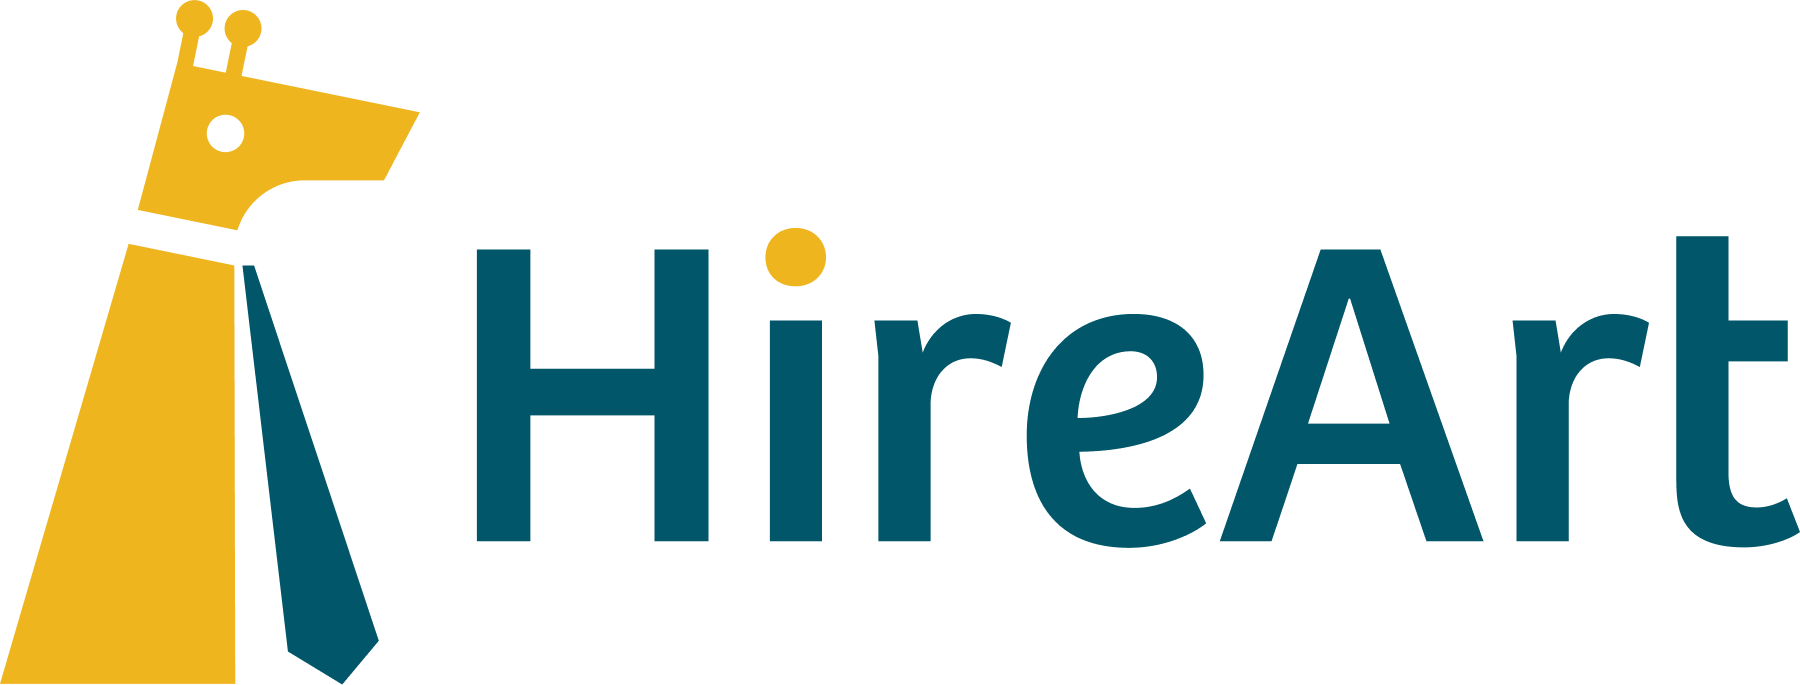 HireArt, Inc.